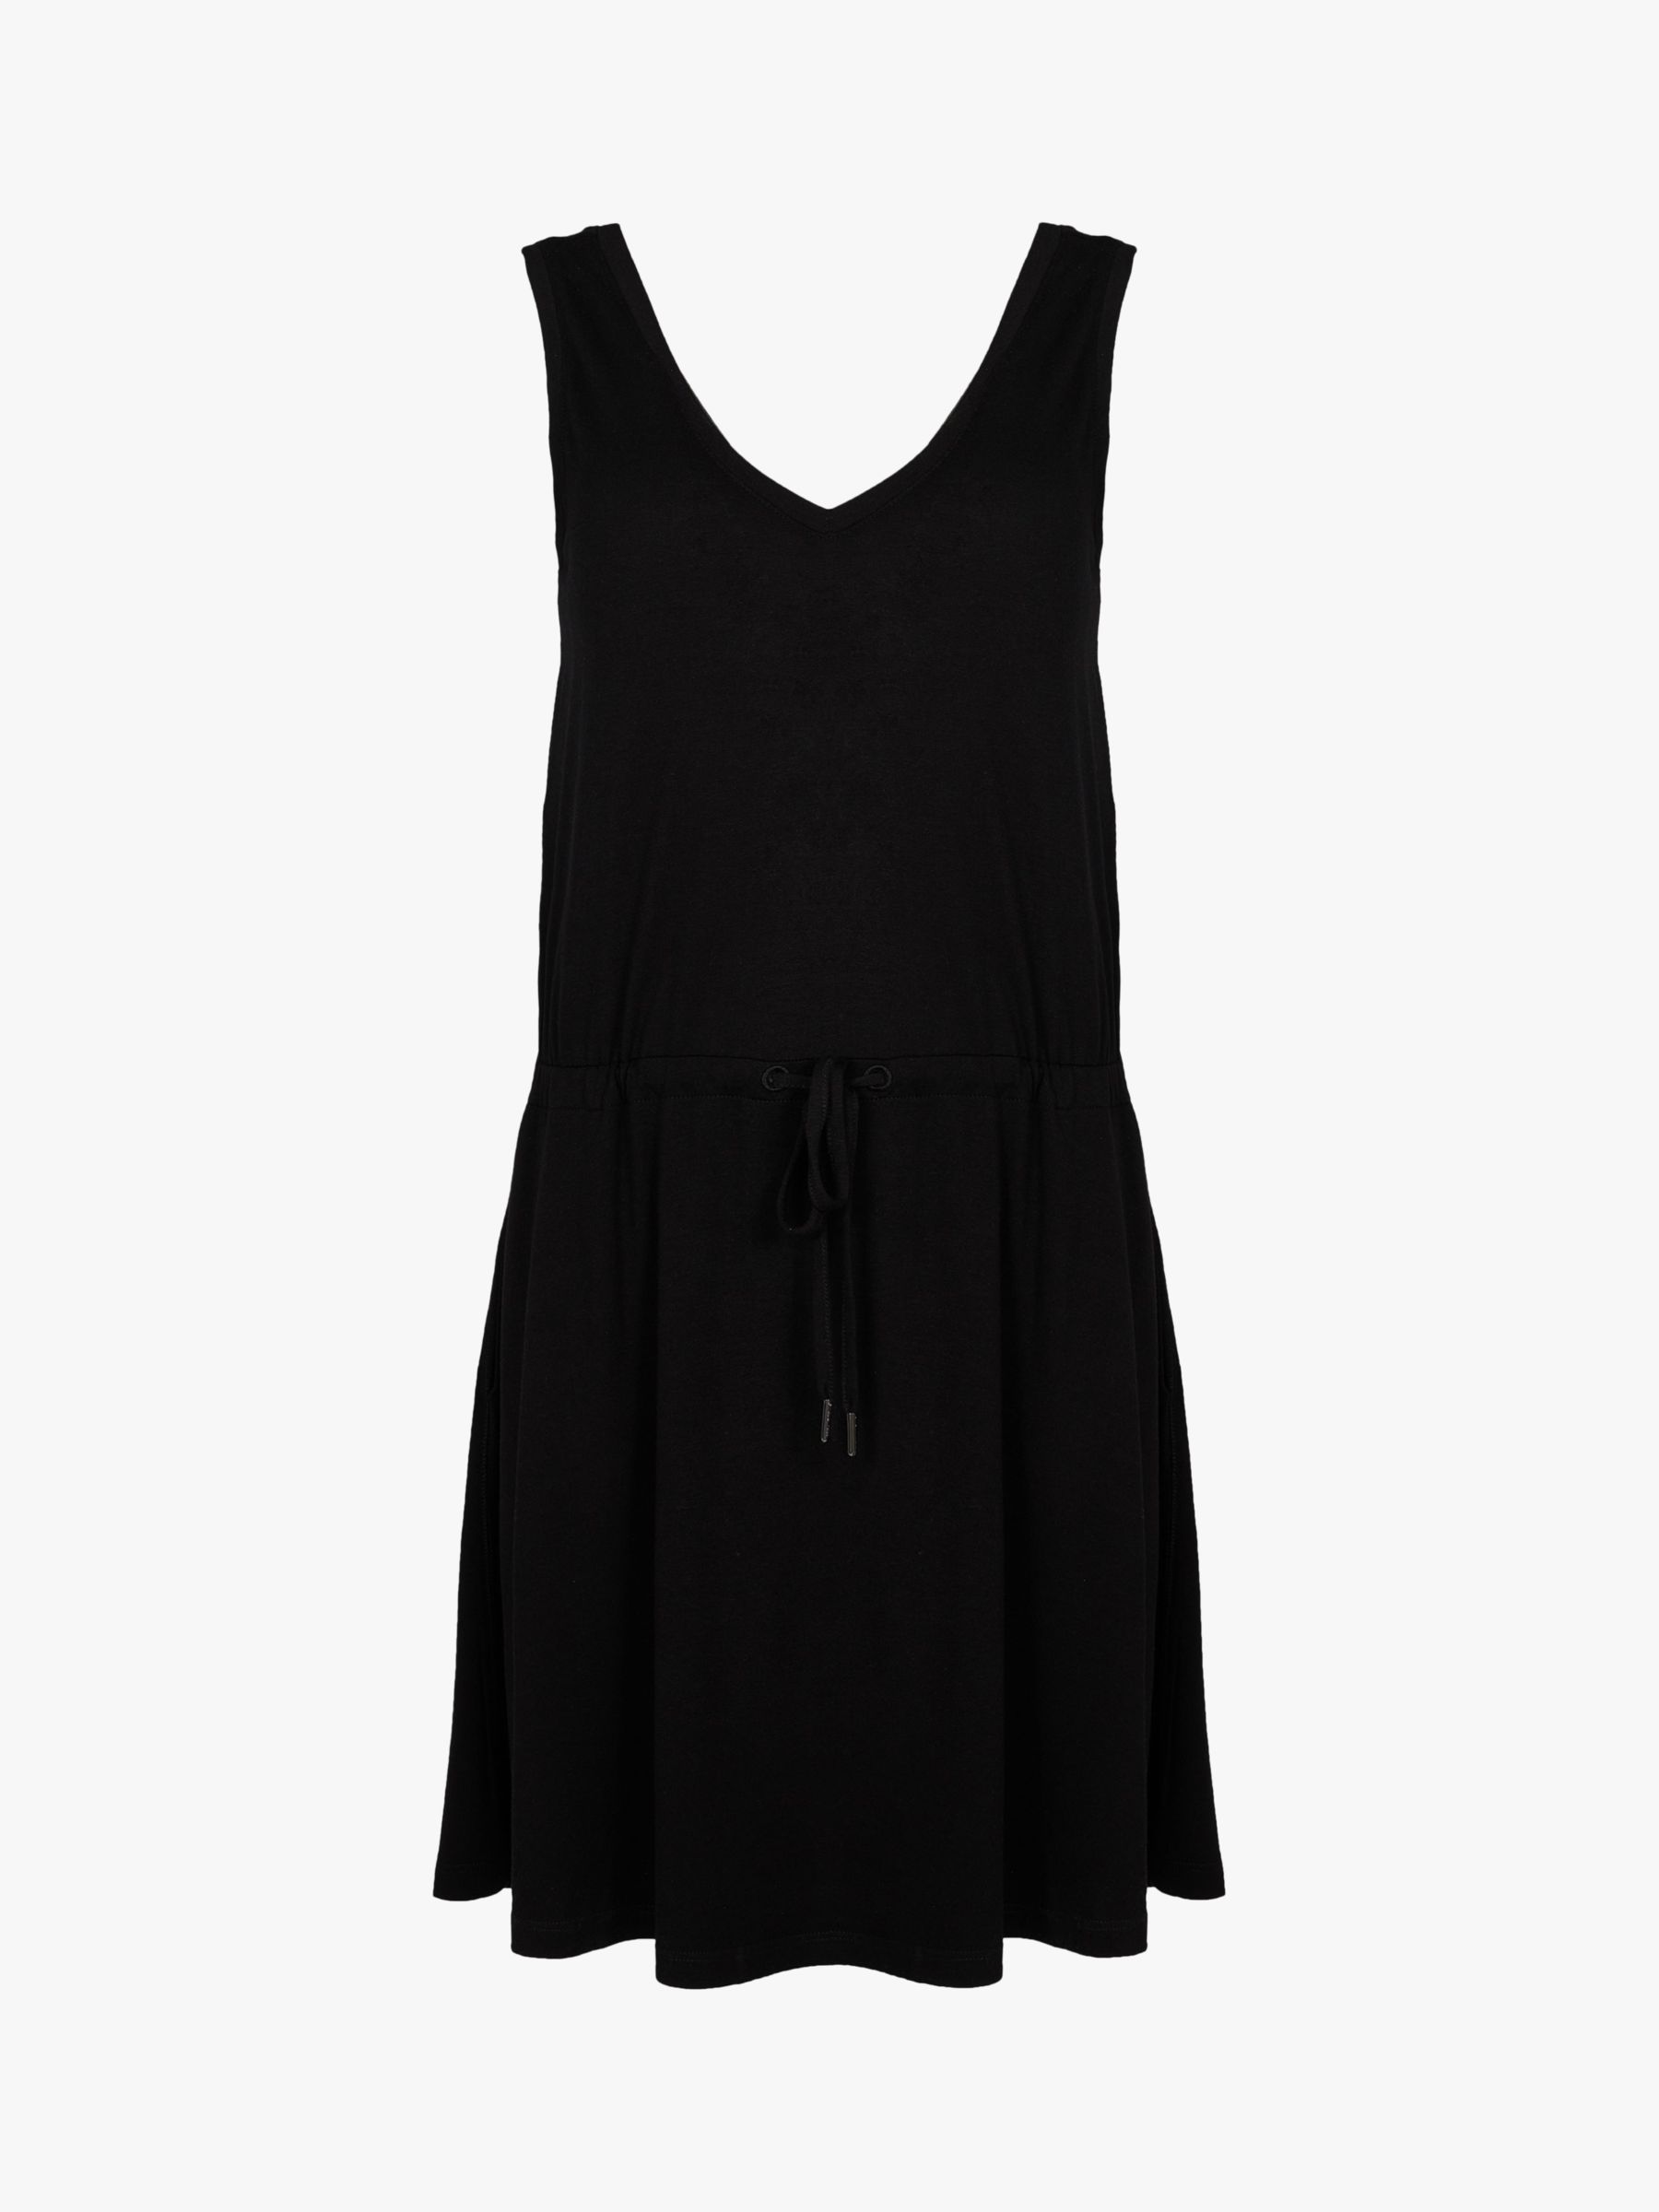 Sweaty Betty Take It Easy Dress, Black at John Lewis & Partners